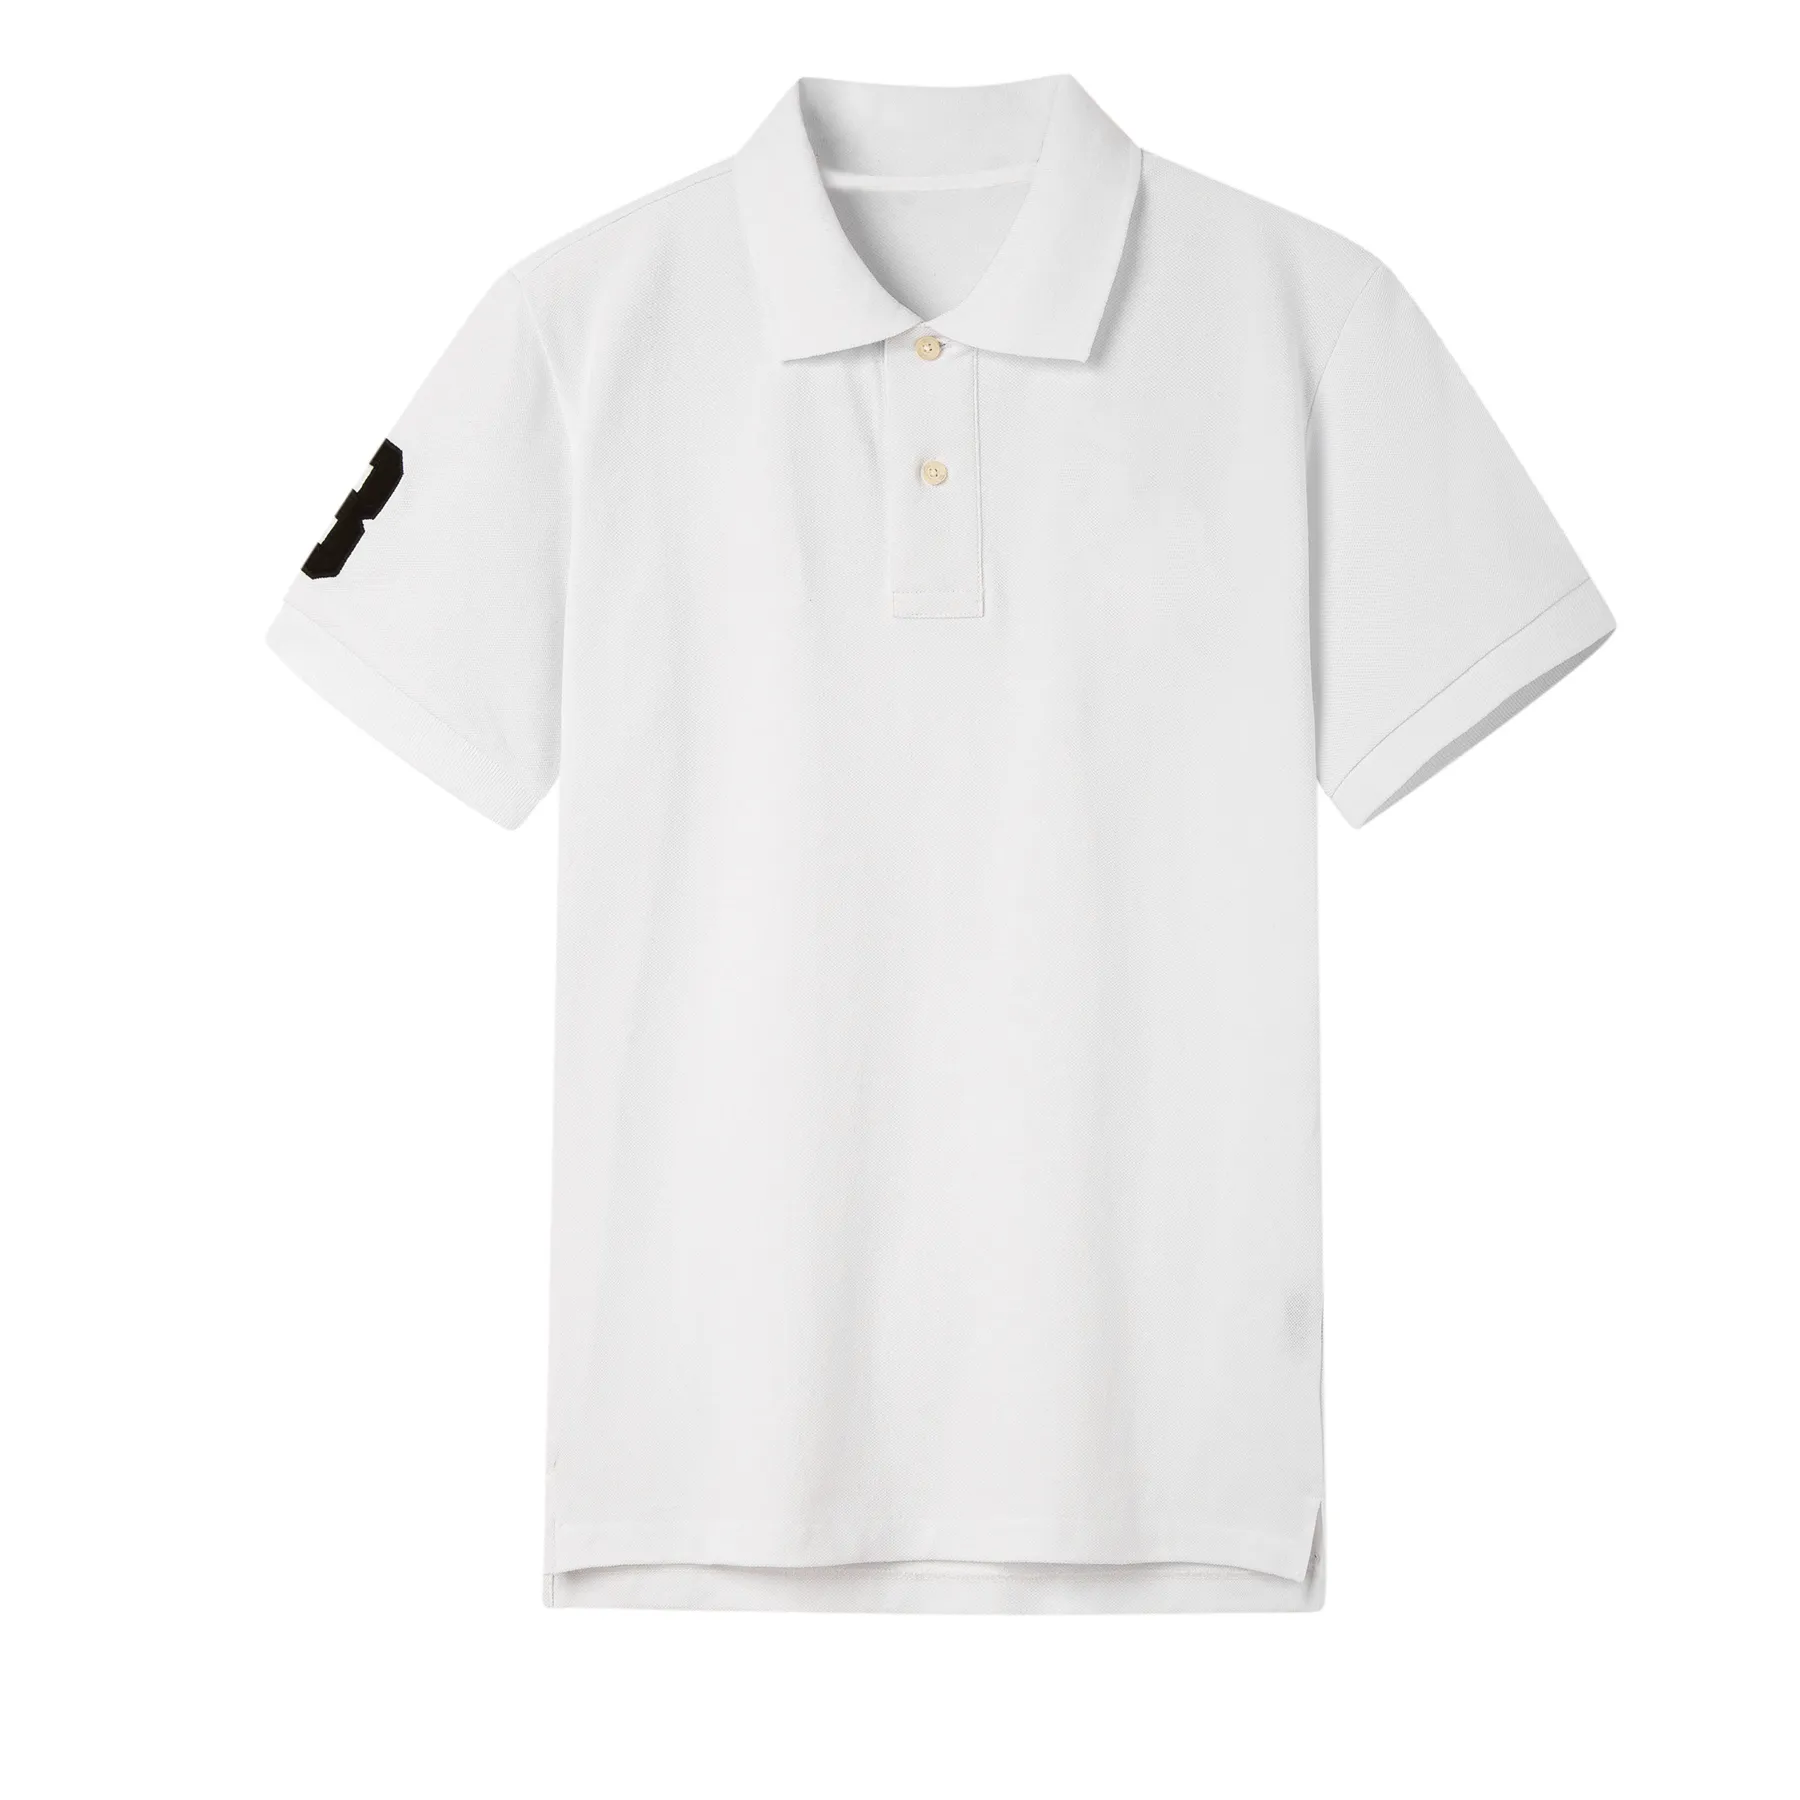 New men's short cotton men's polo shirt sleeves casual fashion sports polo shirt men's cotton lapel short sleeve 4 colors